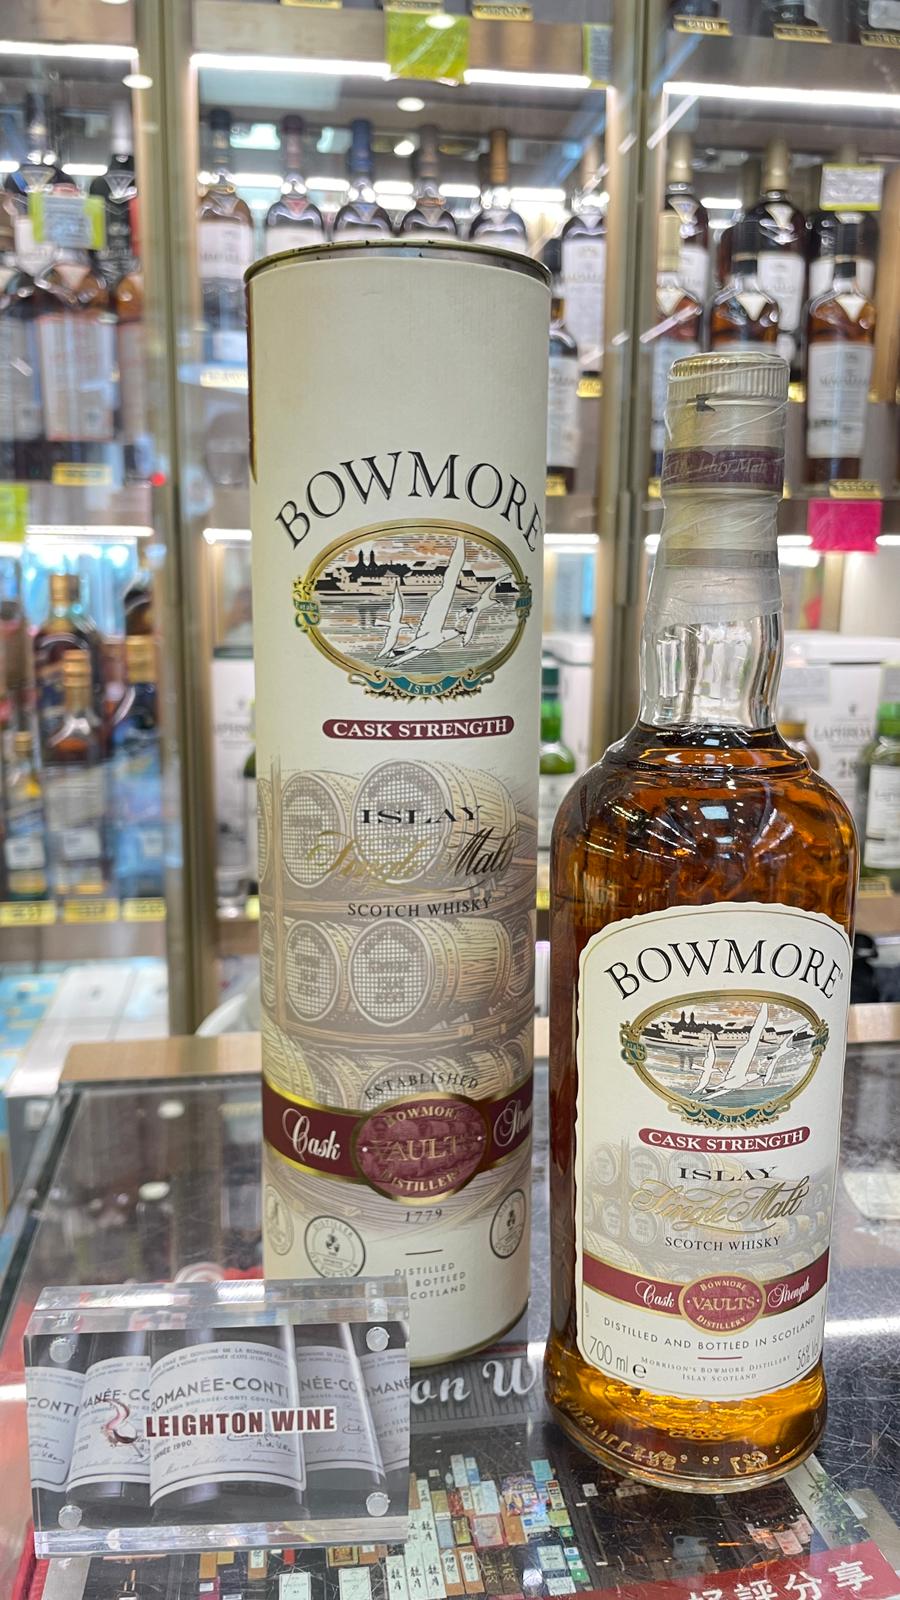 Bowmore Dusk Claret Casked Finished Islay Single Malt Scotch Whisky Seagull Label Cask Strength 50.0%